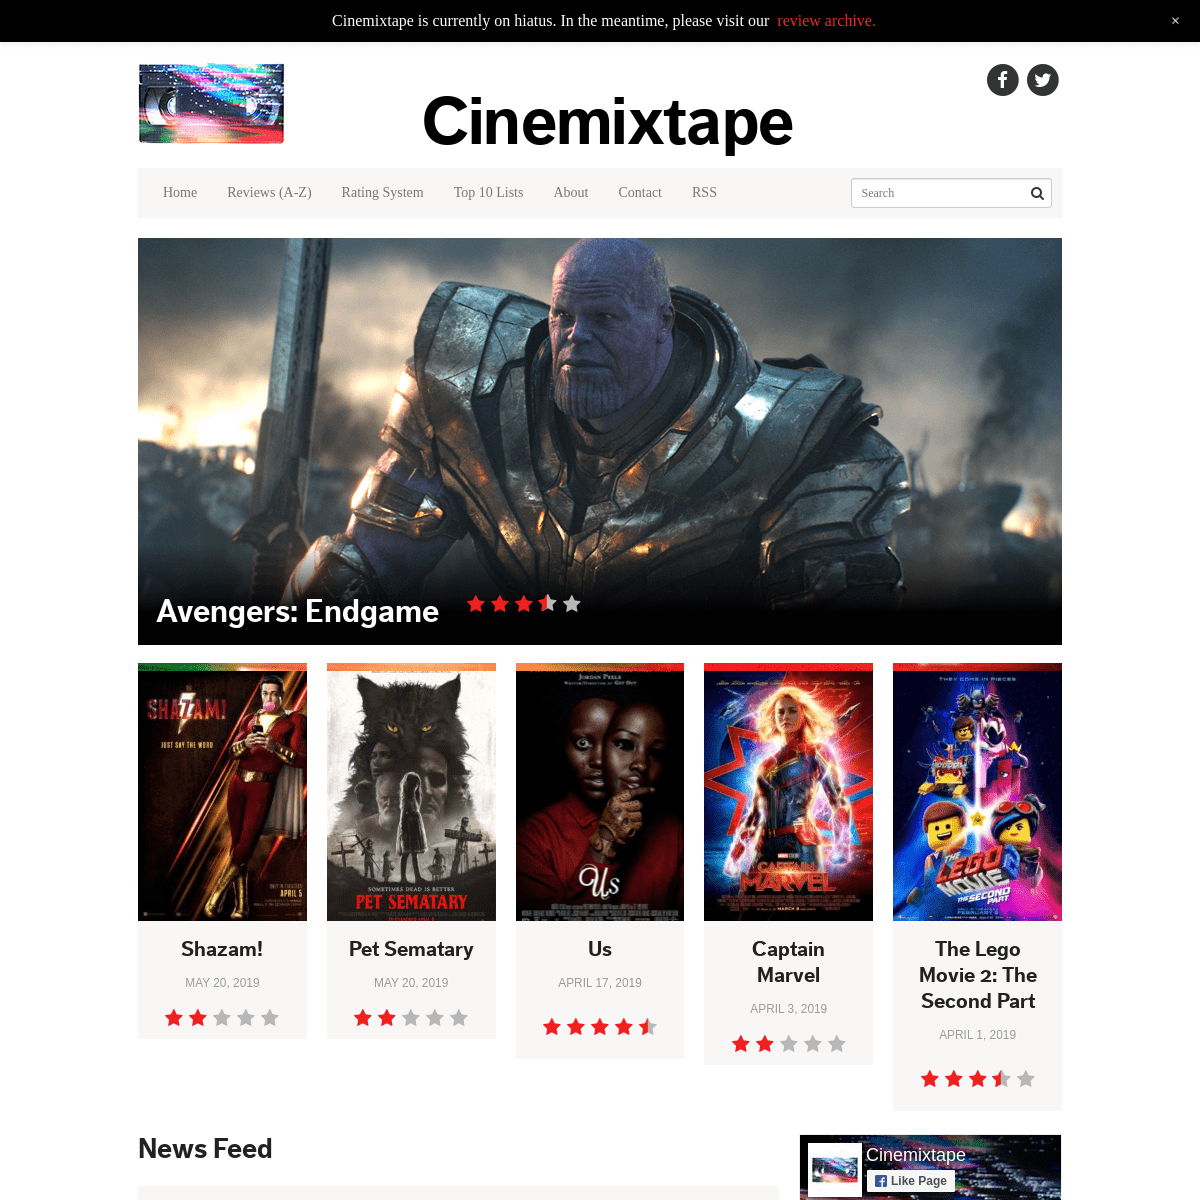 A complete backup of cinemixtape.com